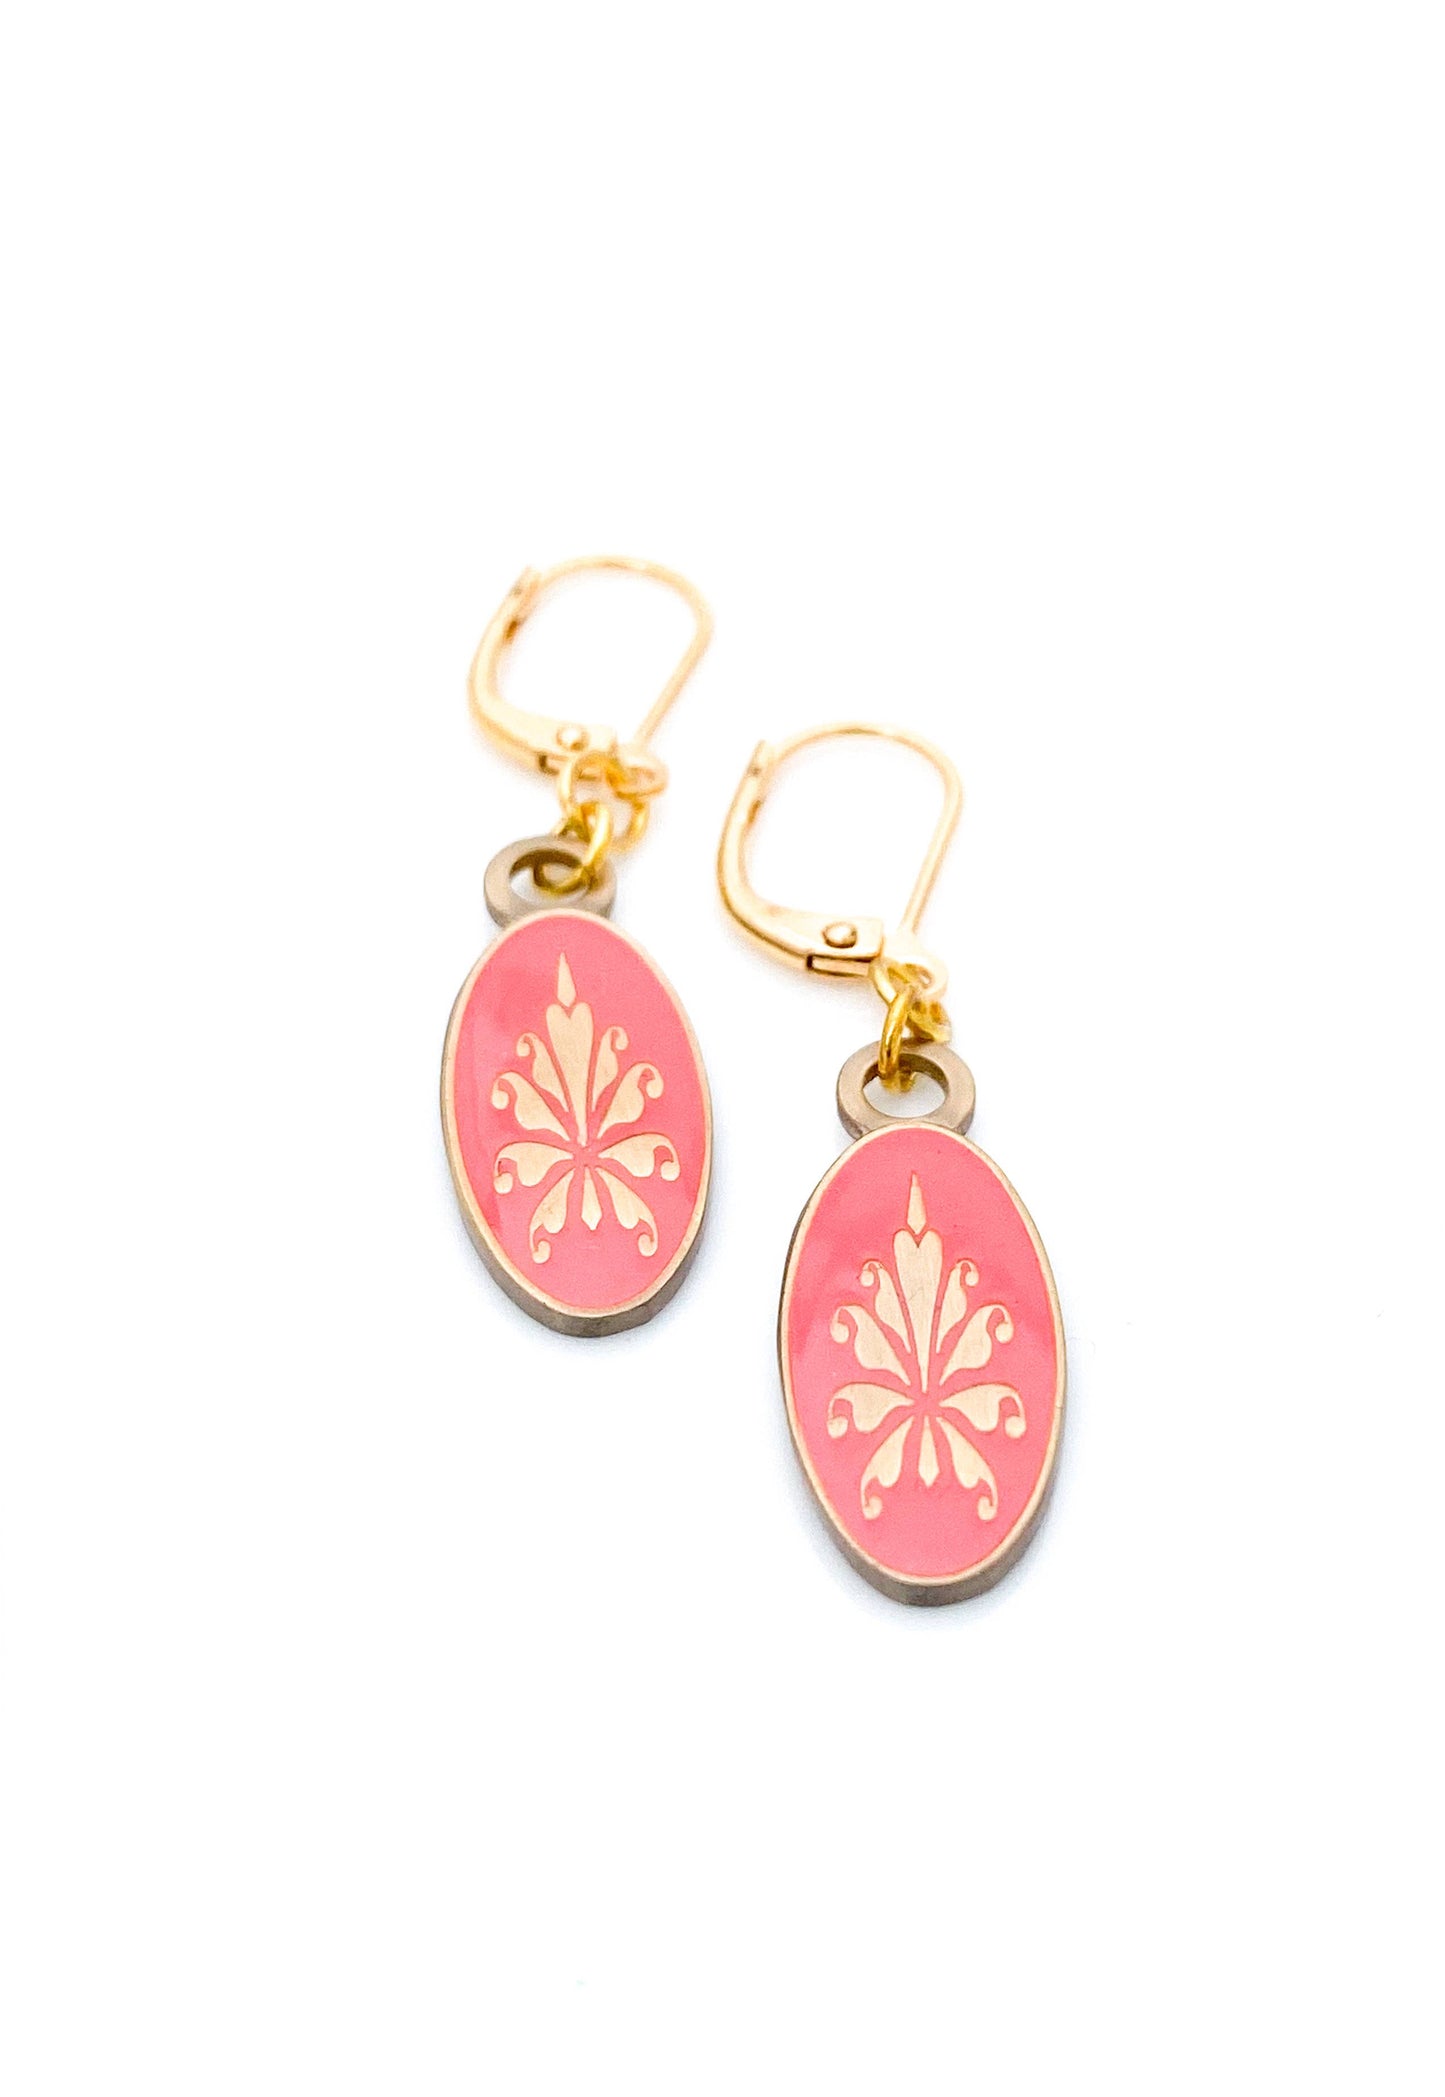 Antiqued gold oval earrings with fleur de lys pattern on coral enamel